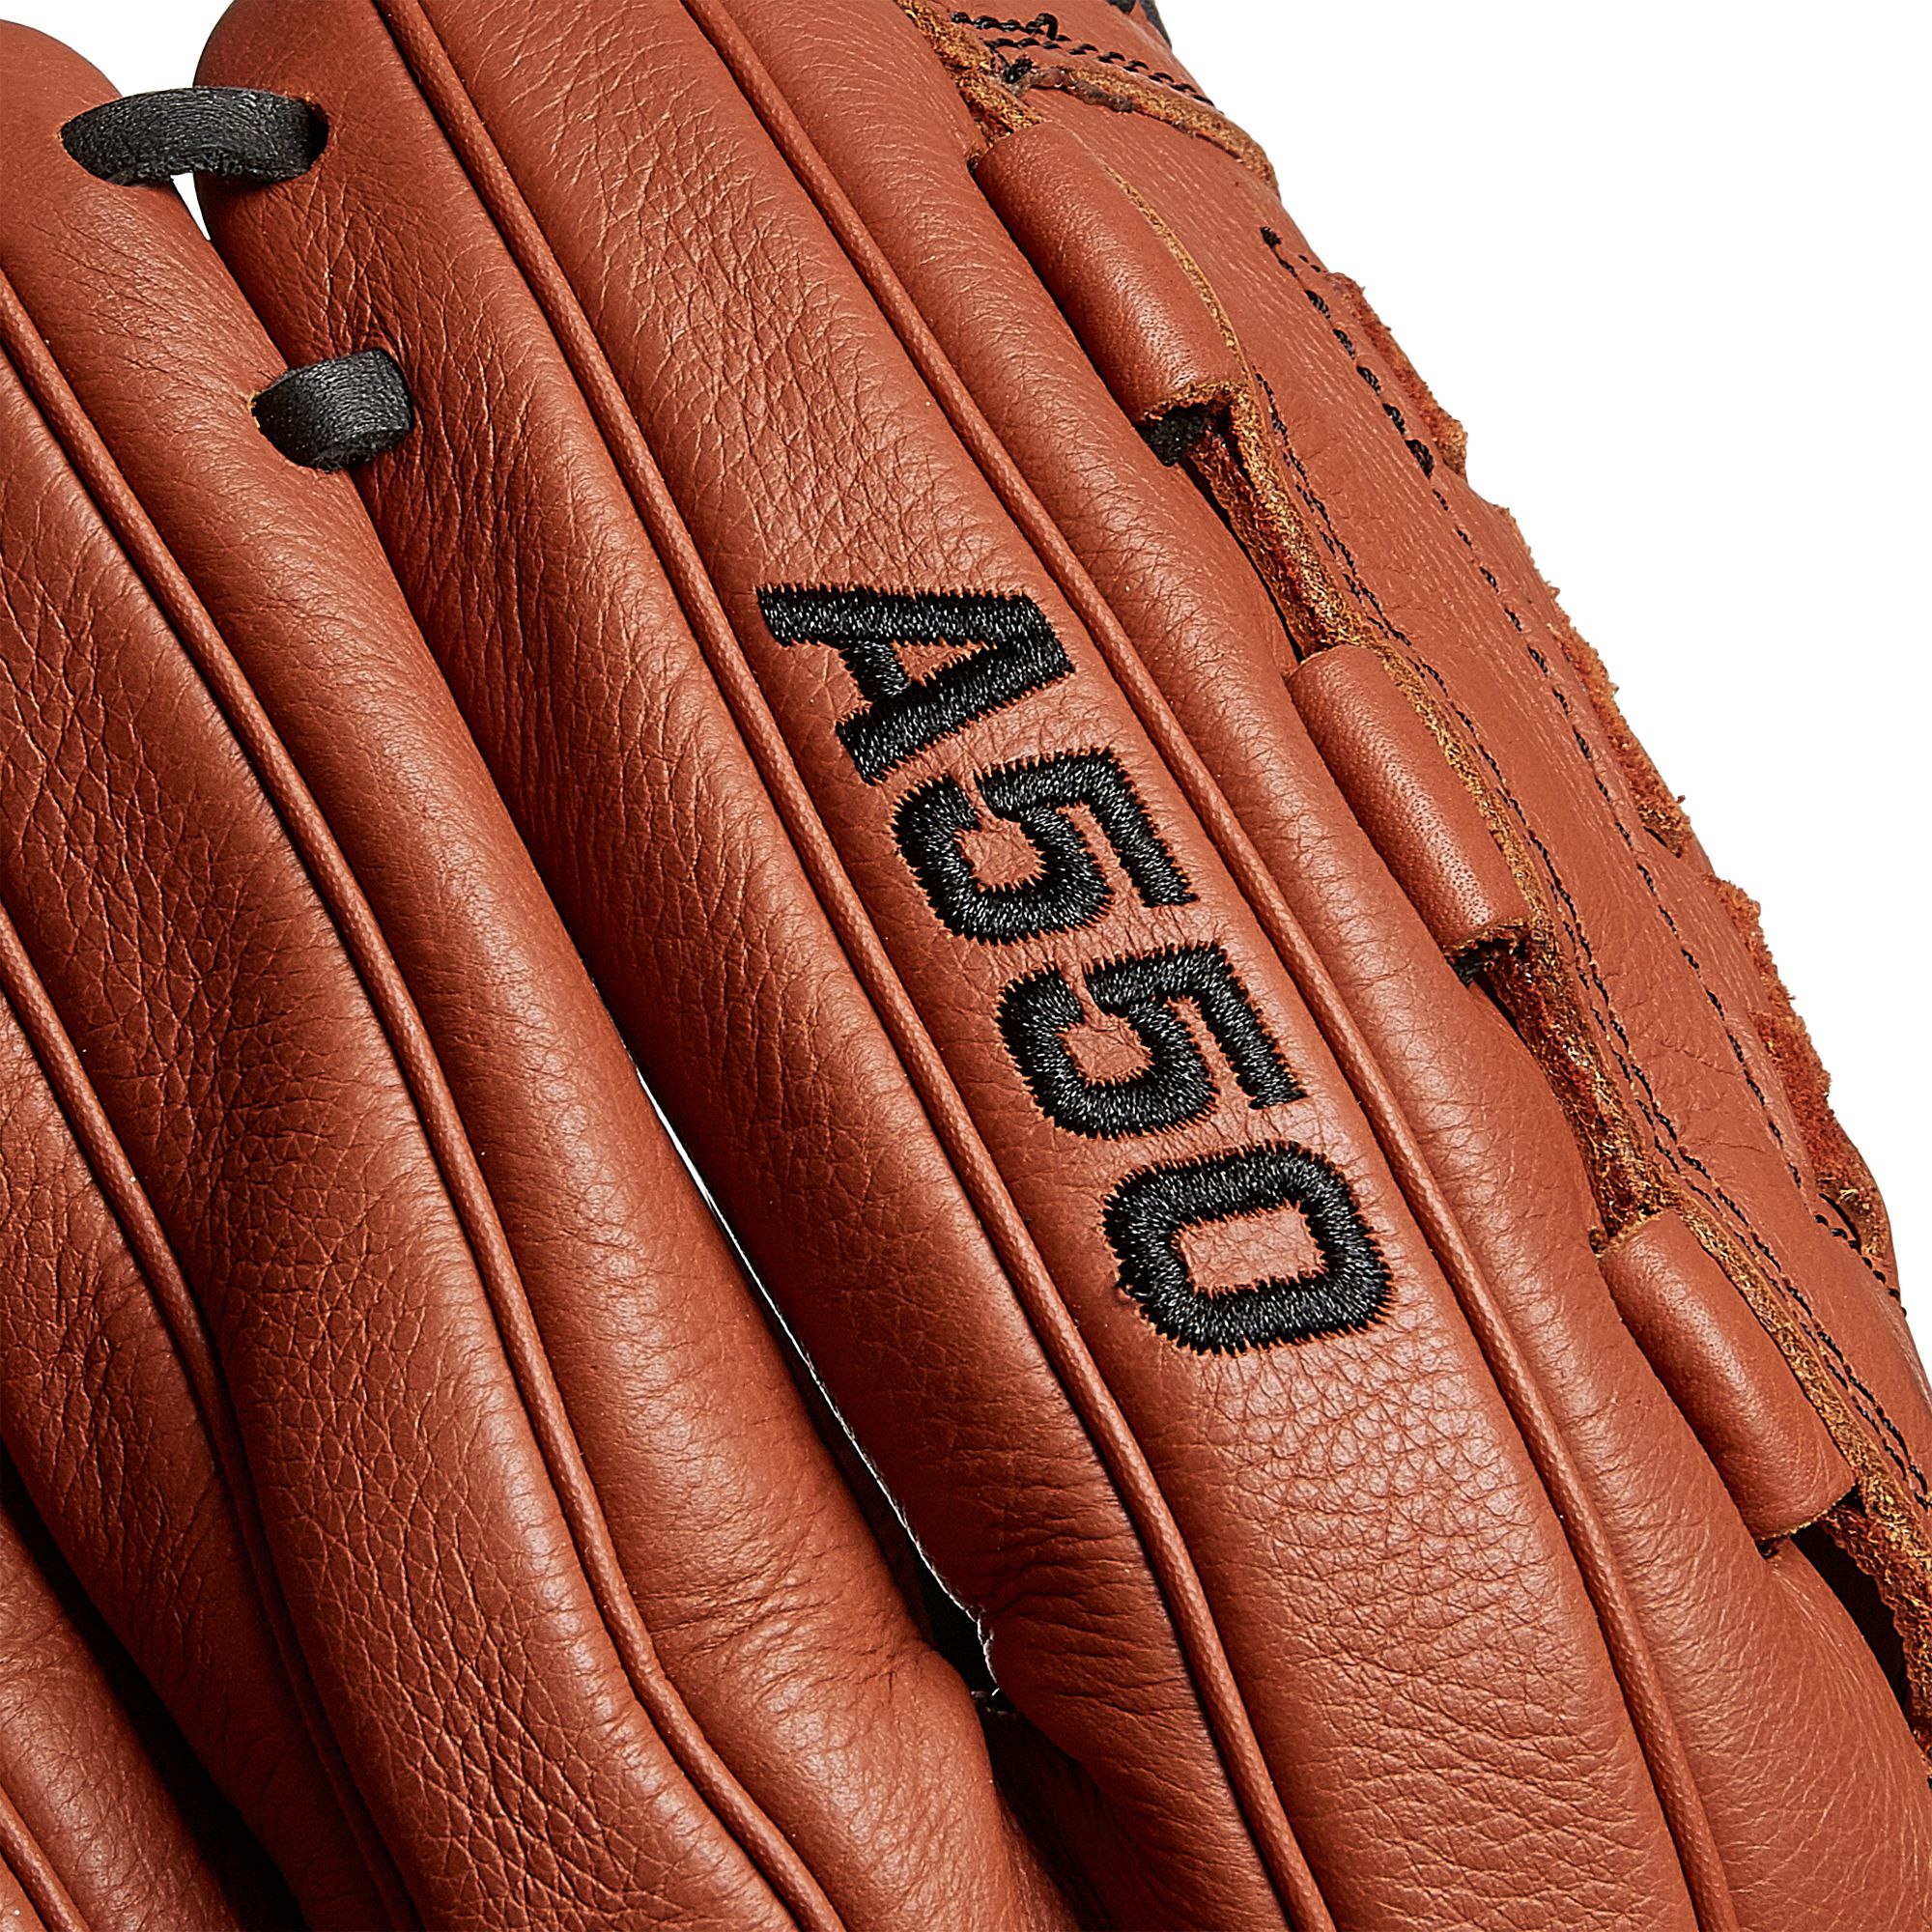 Wilson 12'' Youth A550 Series Glove